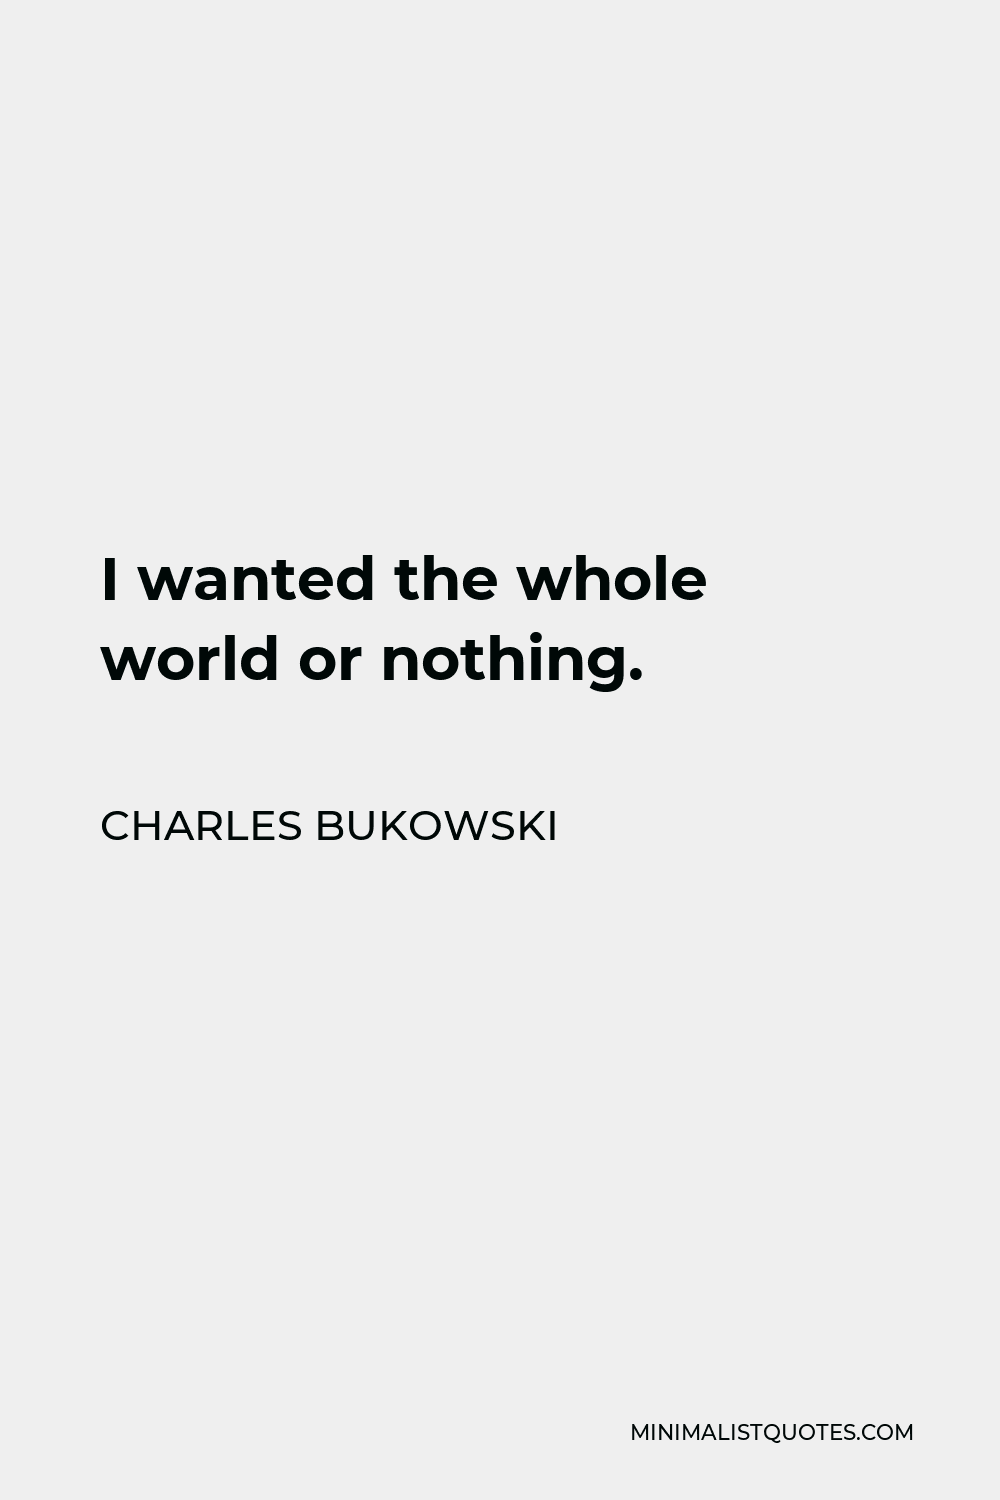 Charles Bukowski Quote: I wanted the whole world or nothing.